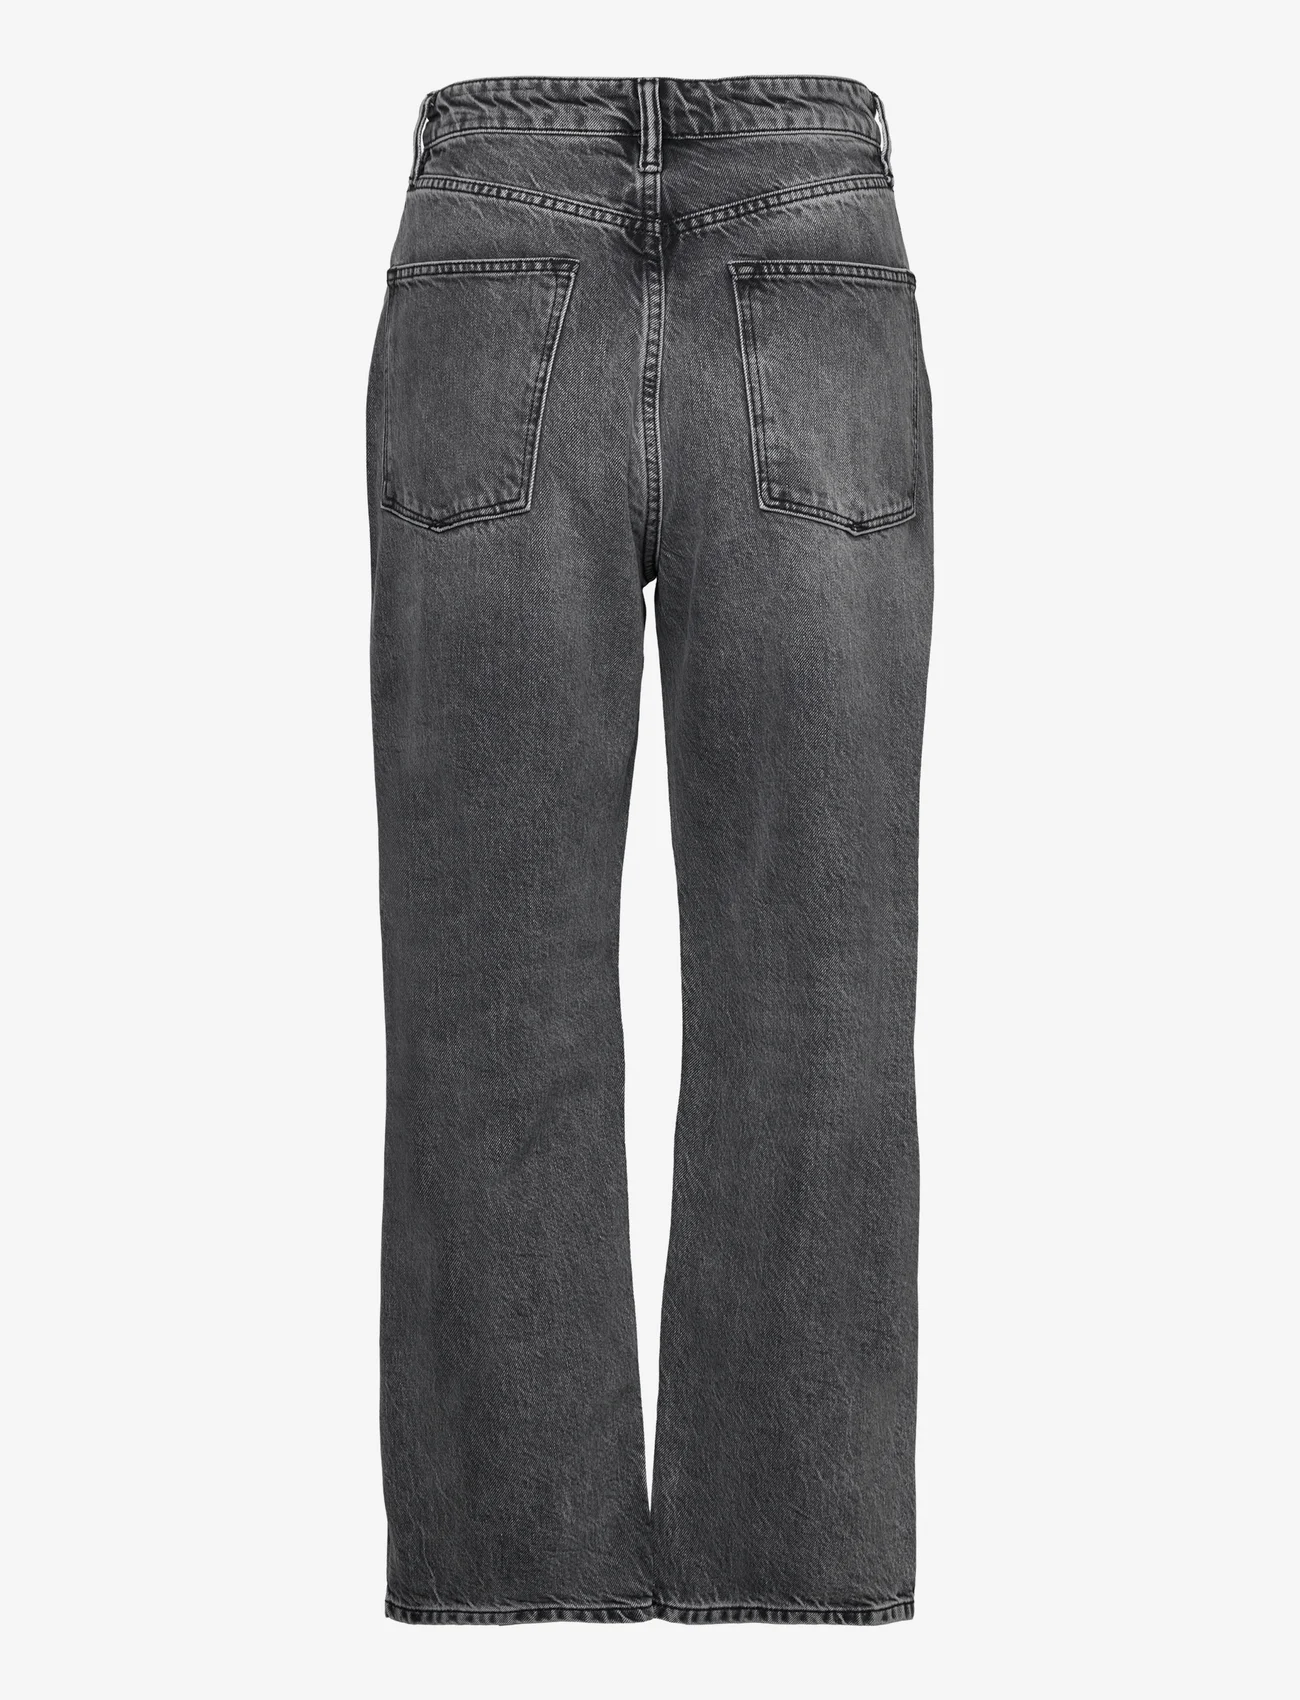 AllSaints - ZOEY JEAN - vide jeans - washed black - 1